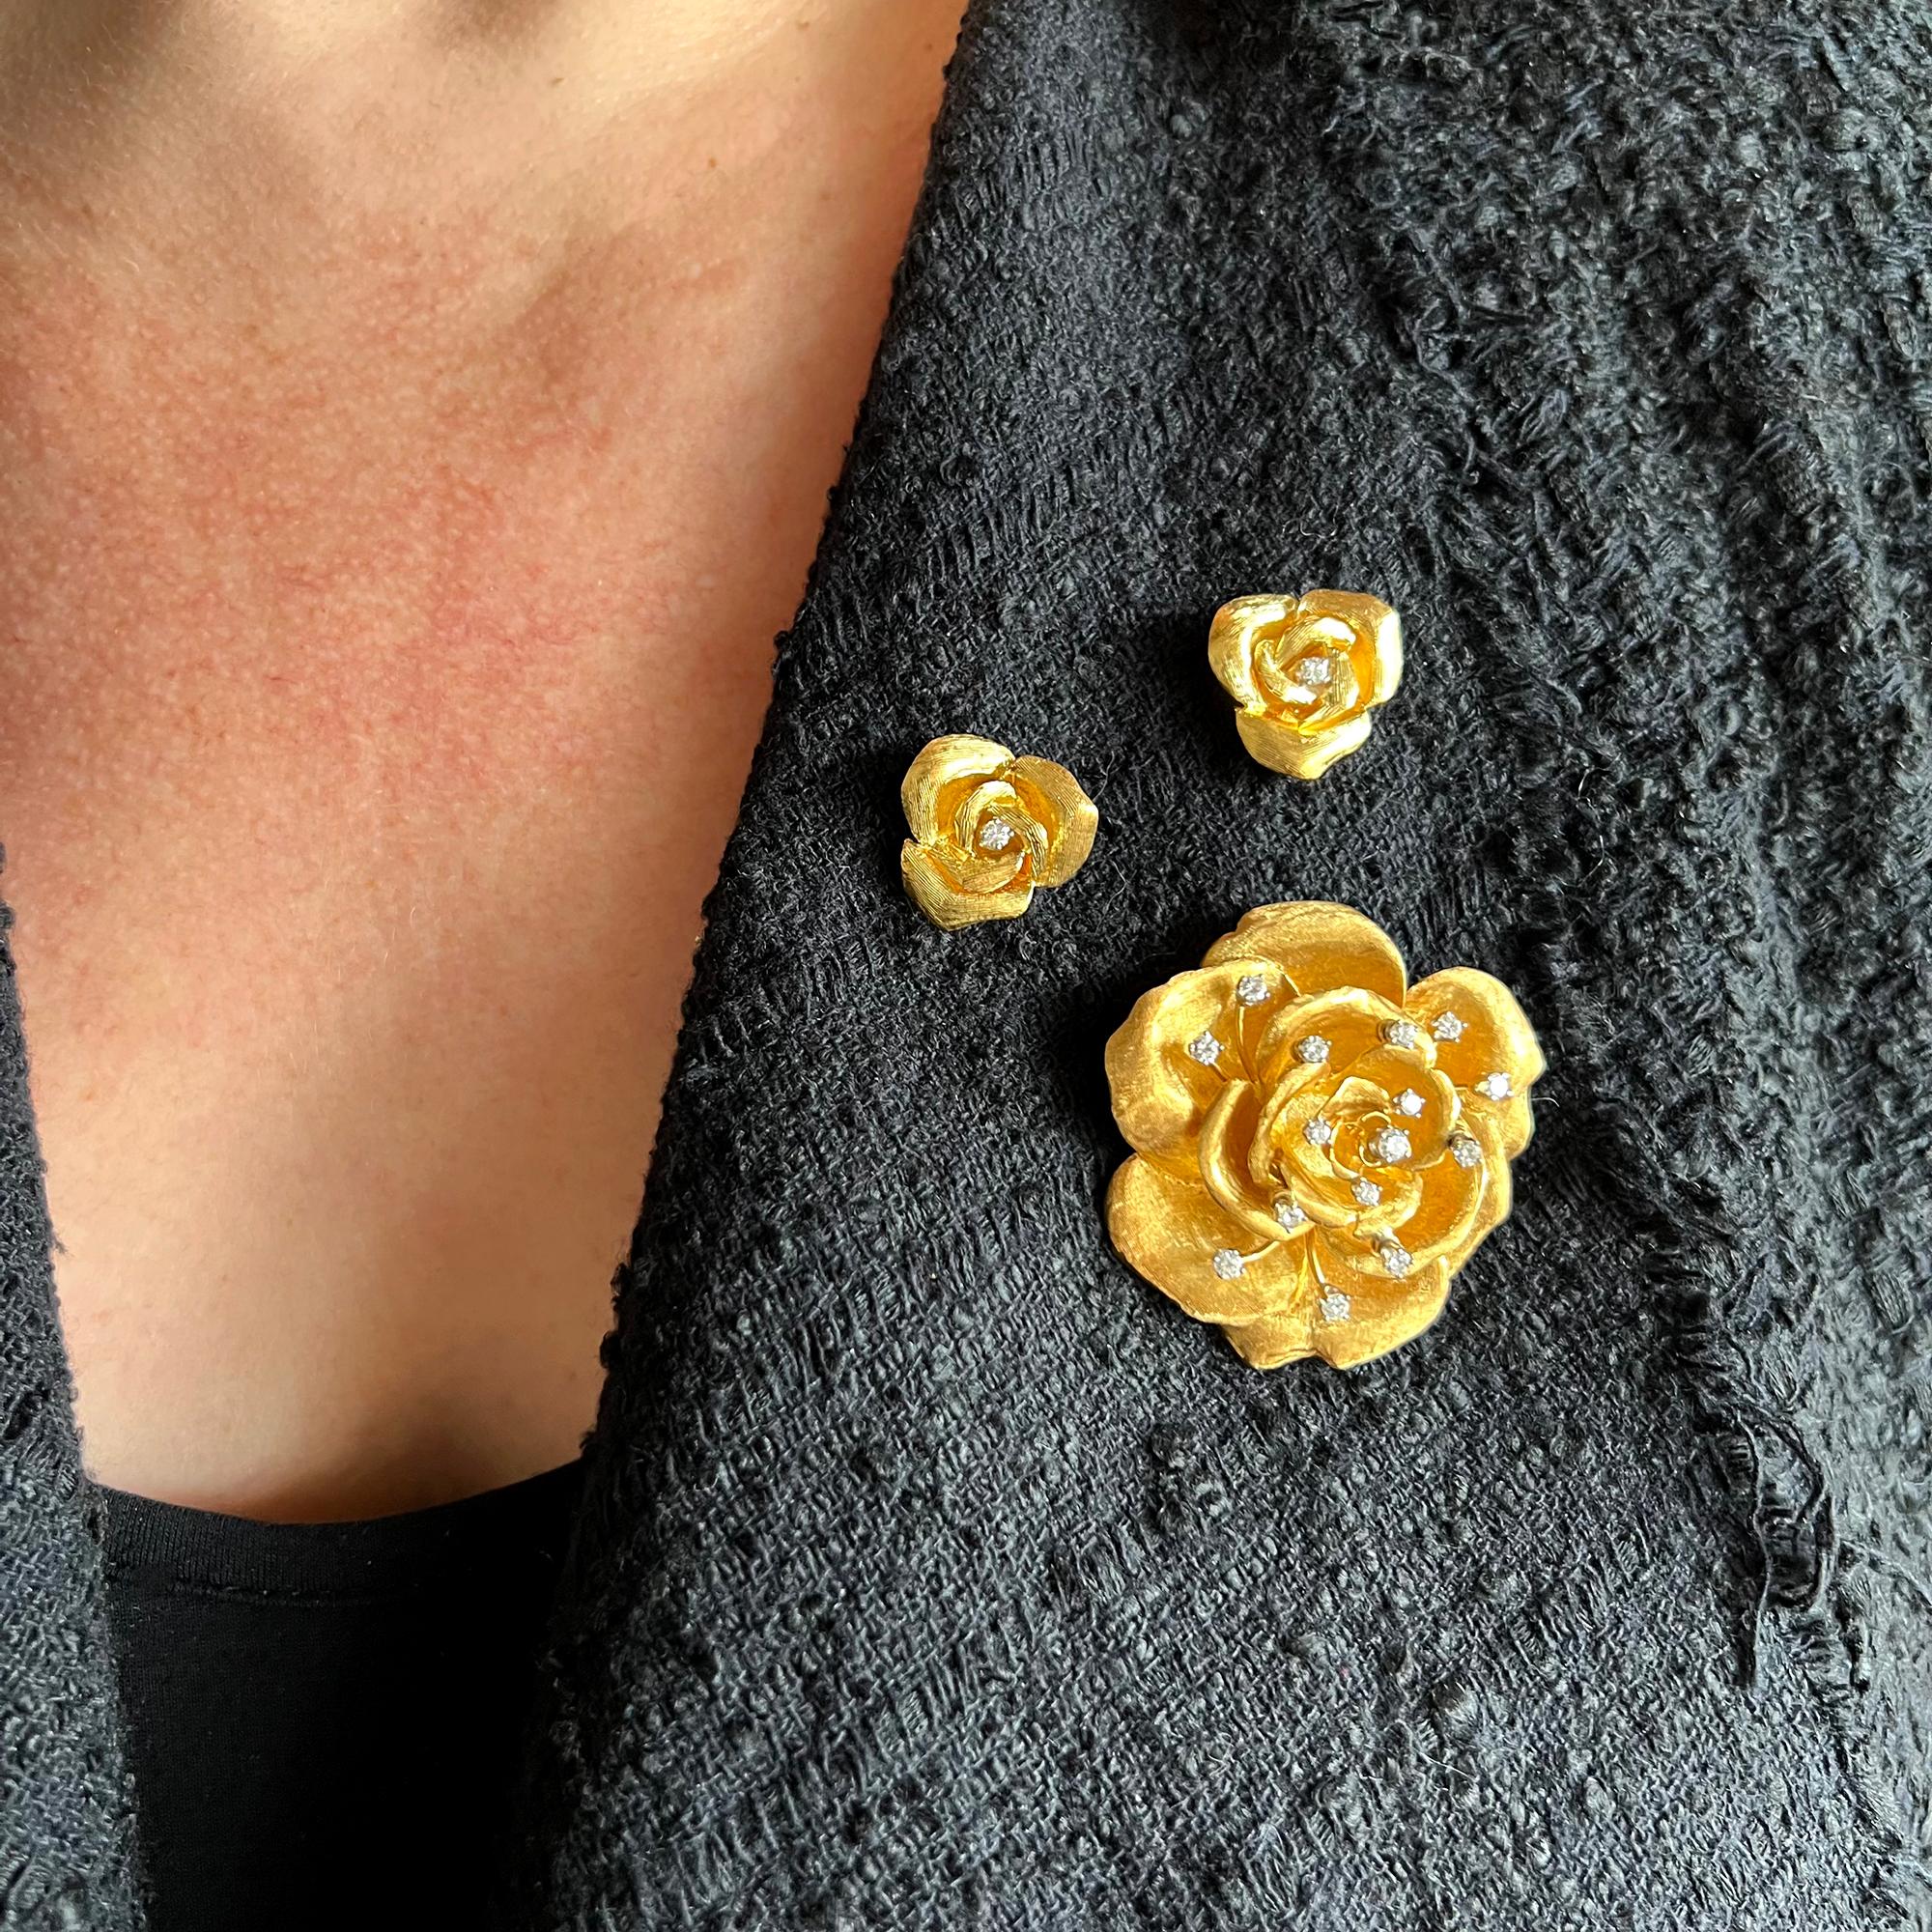 Women's Cartier France 18K Gold Diamond Rose Flowering Brooch and Earrings Set For Sale